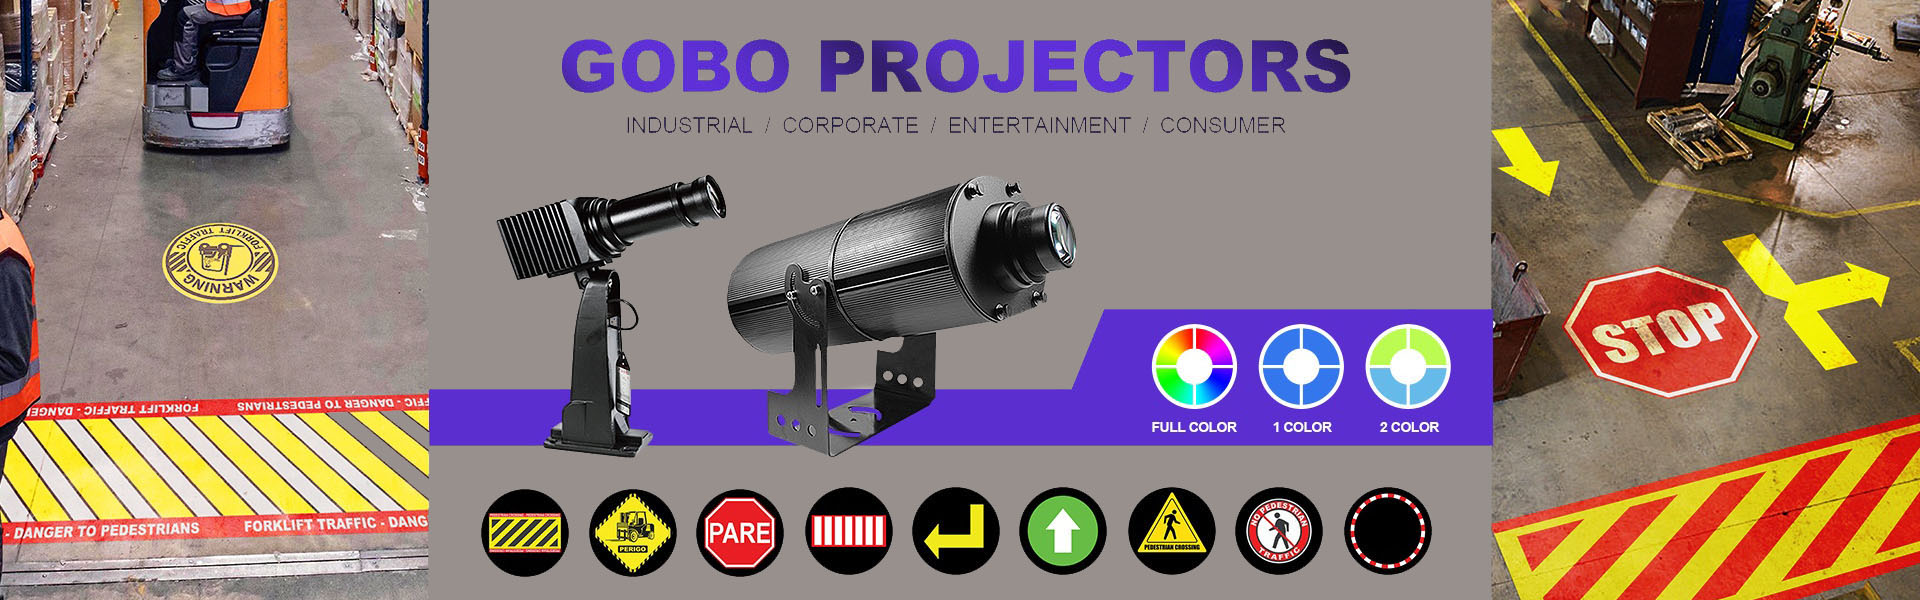 Gobo -logo -projektor, LED -arbejdslys, LED -gaffeltrucklys,Wetech Electronic Technology Limited